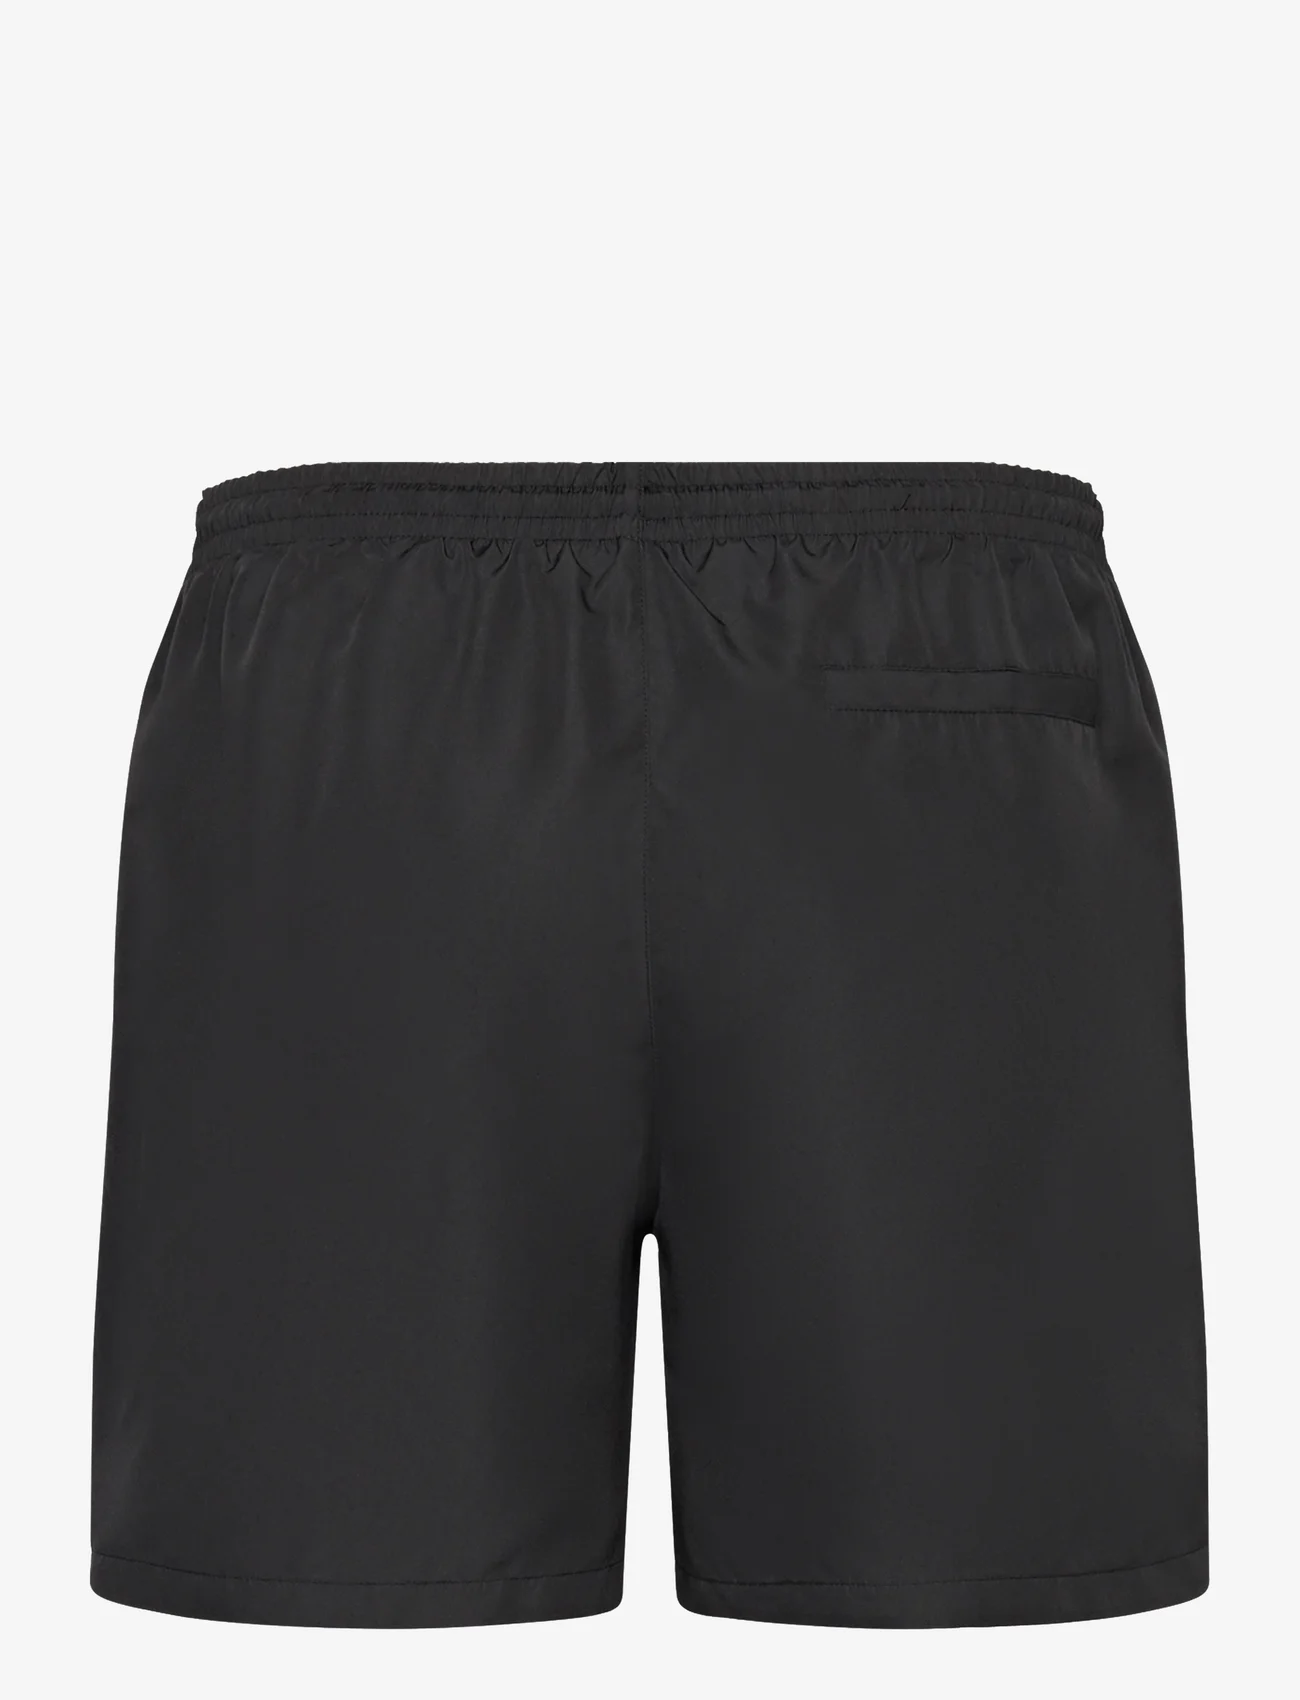 Woodbird - Bommy Swim Shorts - swim shorts - black - 1